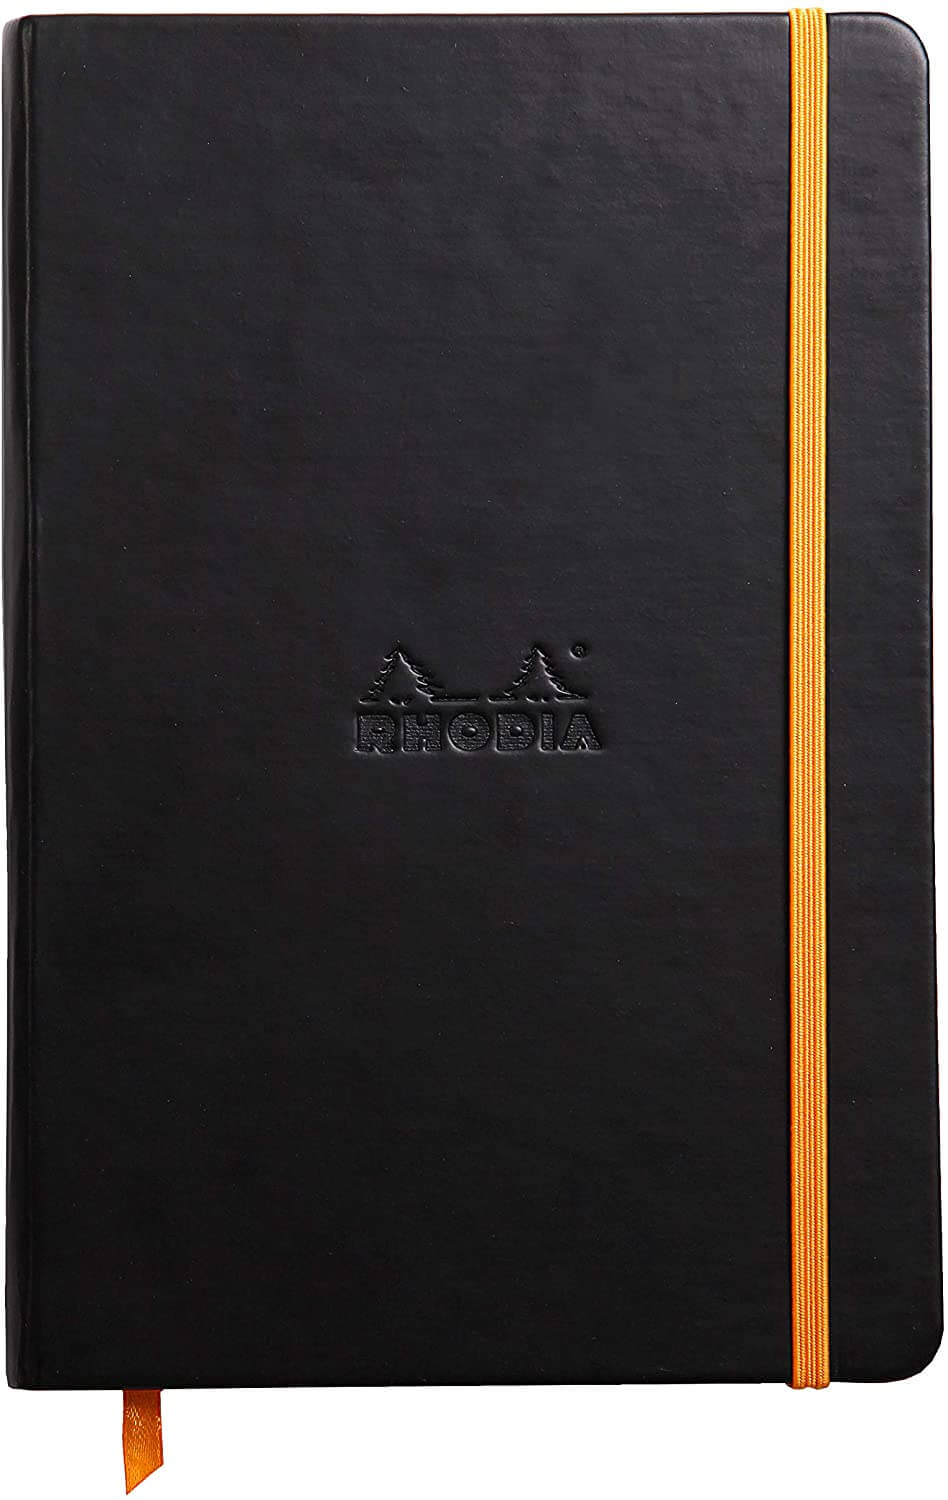 Rhodia - Sewn Spine Notebook – Heartworm Press